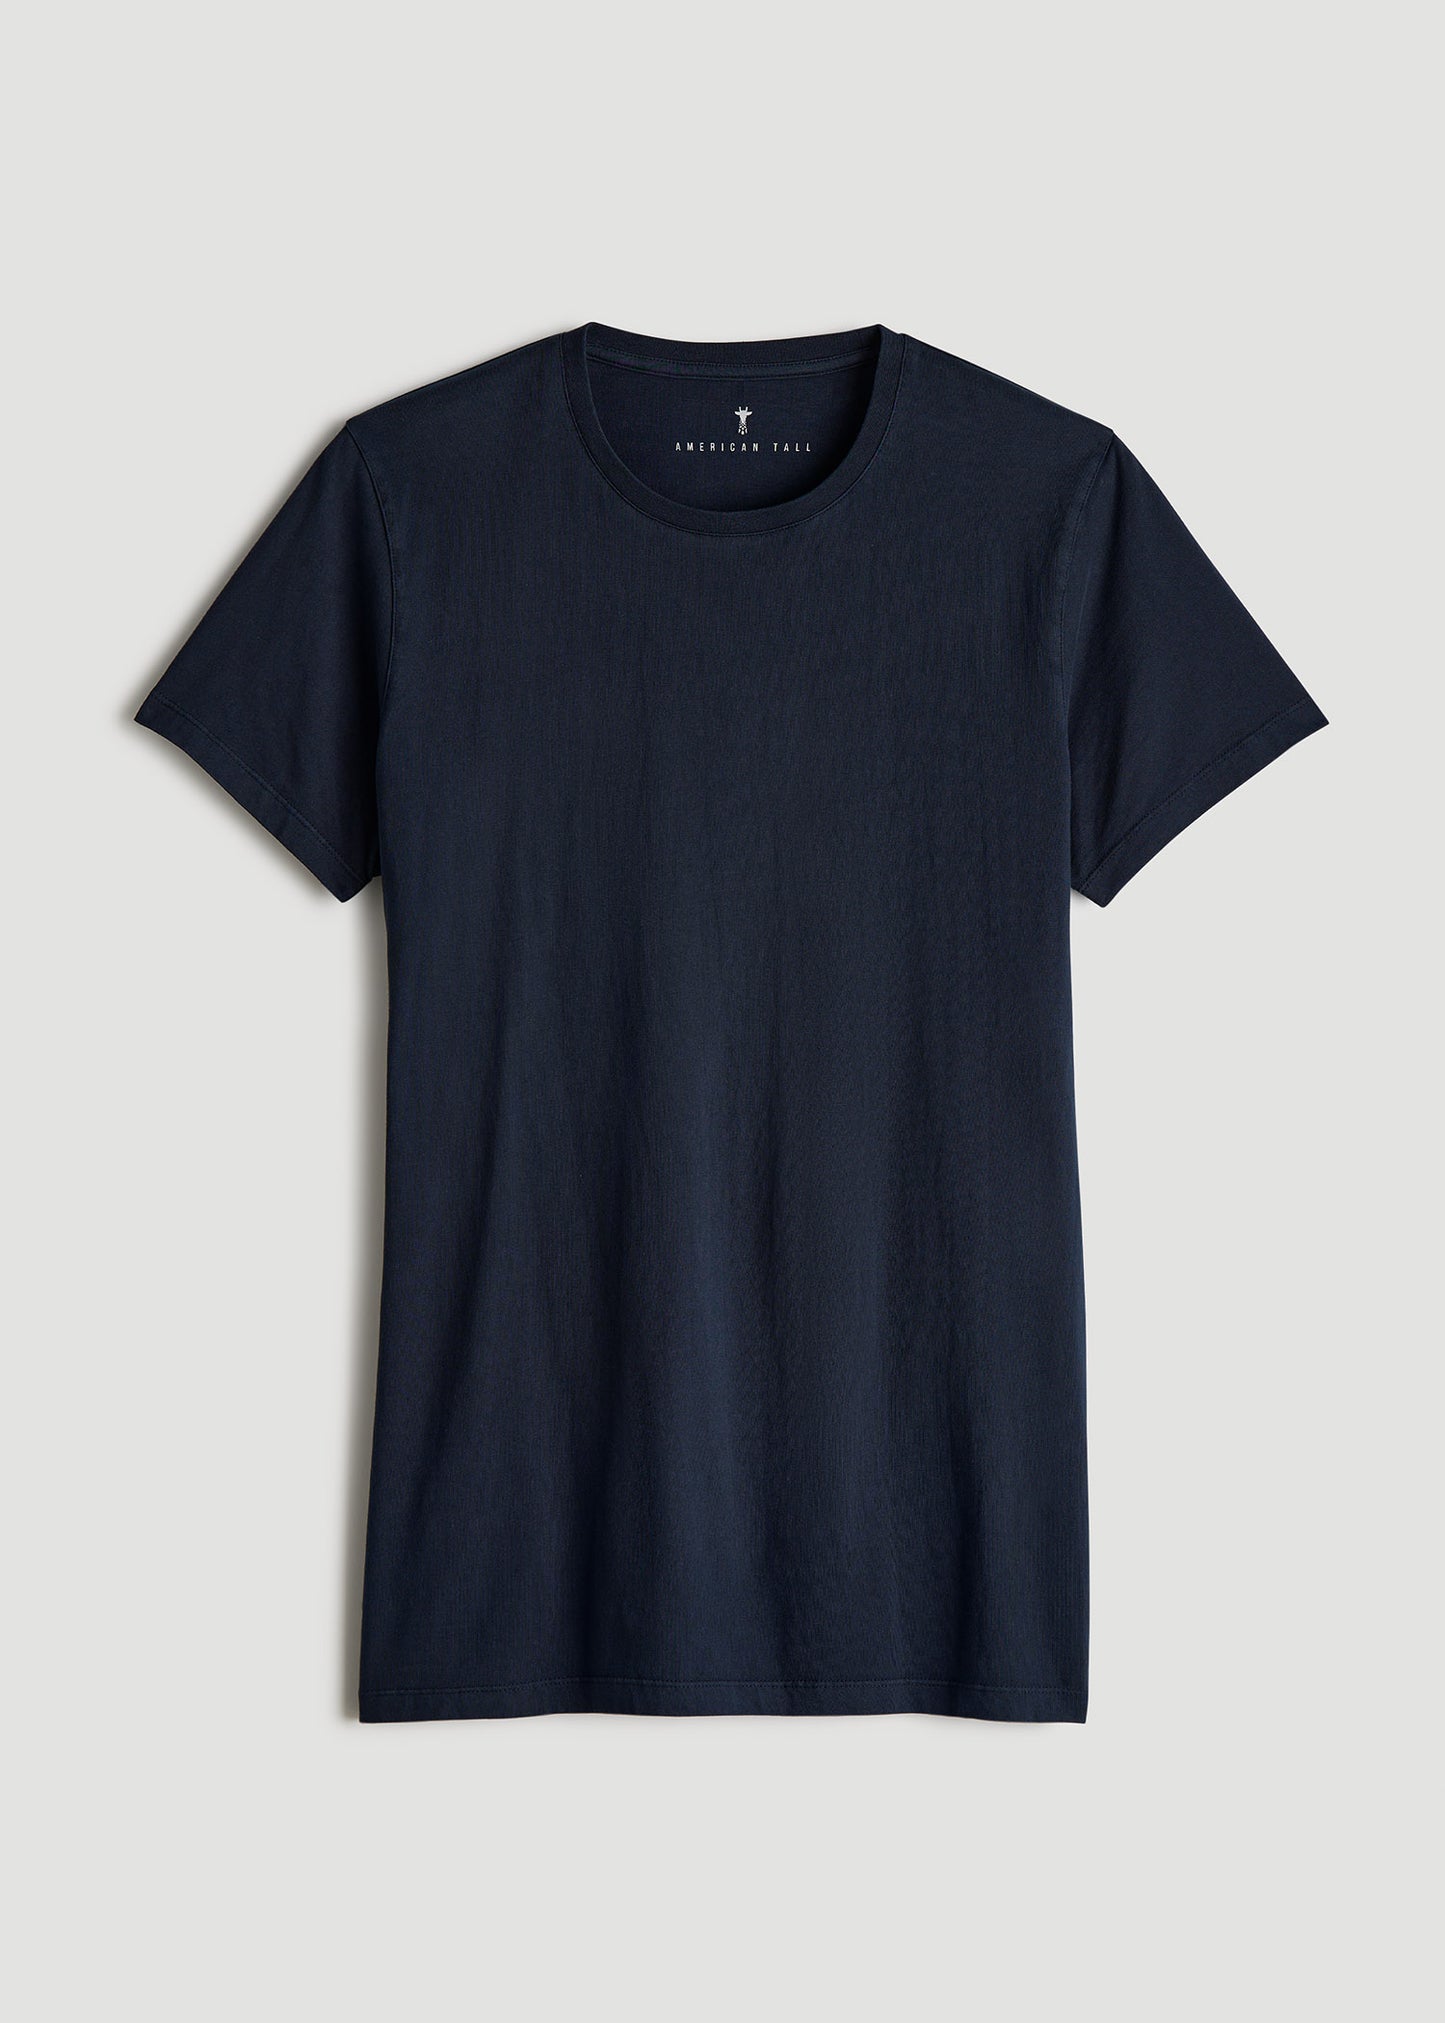 MODERN-FIT Garment Dyed Cotton Men's Tall T-Shirt in Black